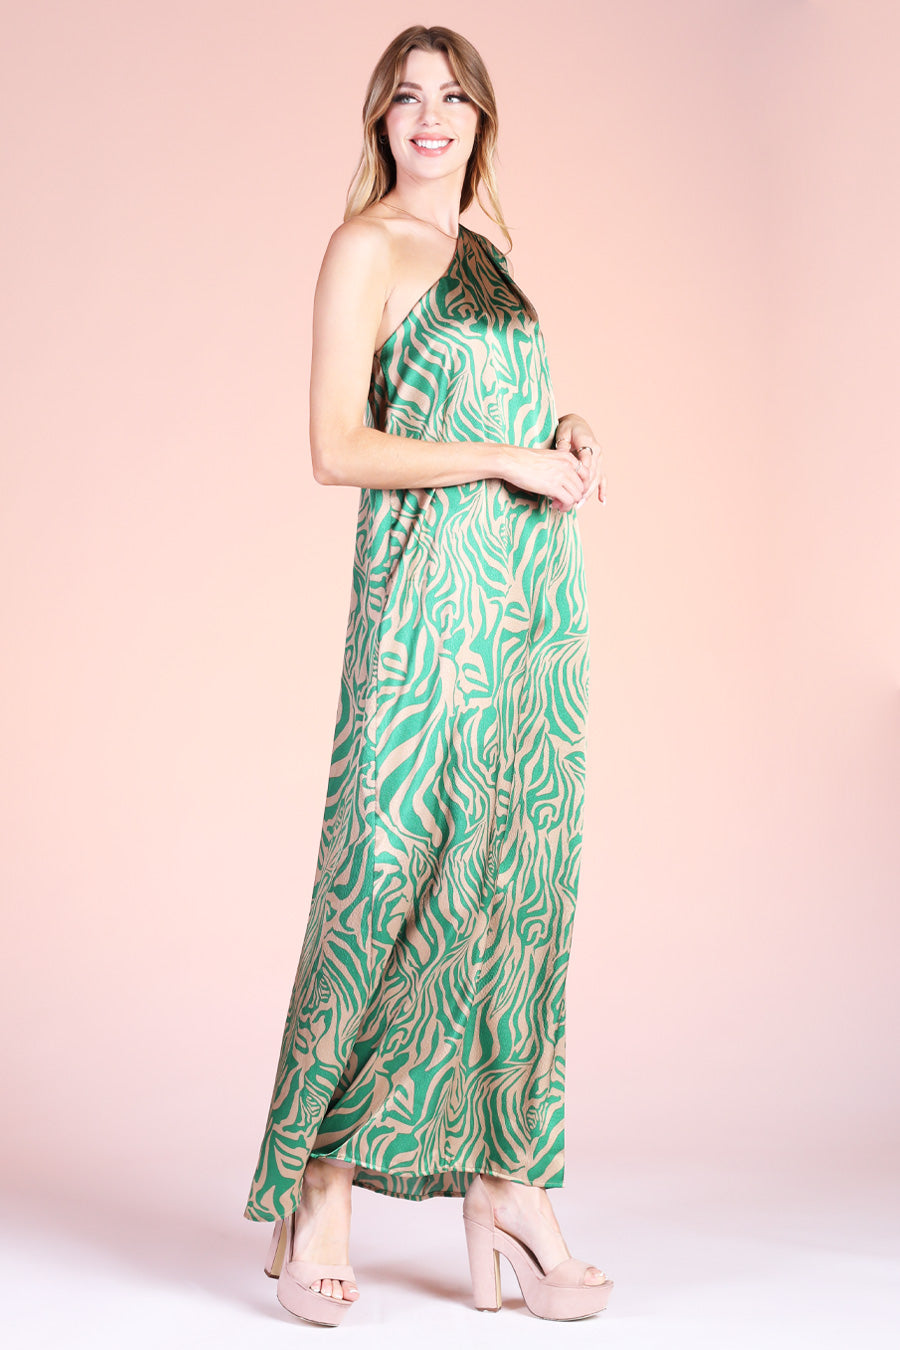 Frida Luxe Satin Greek Goddess Maxi Dress - Green